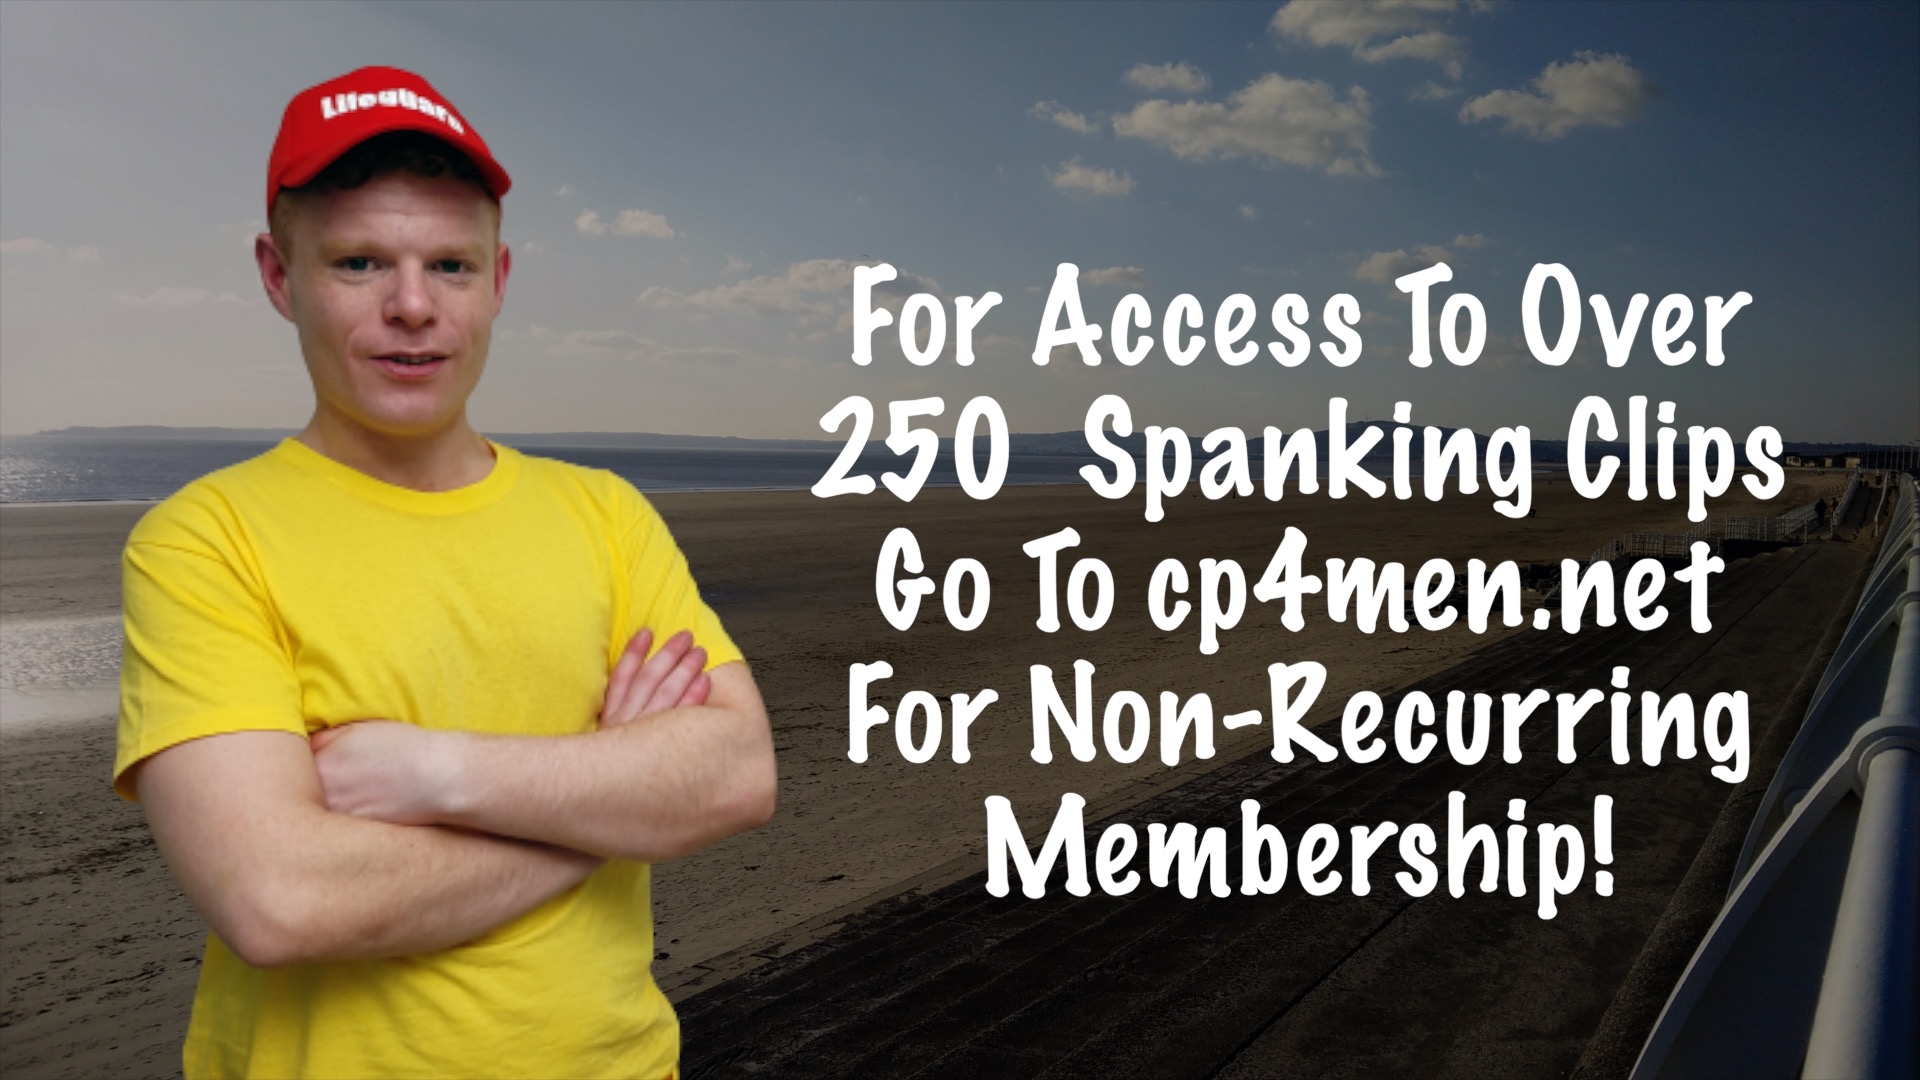 CP4Men: Oliver's Lifeguard Spanking - Jock Spank - Male Spanking